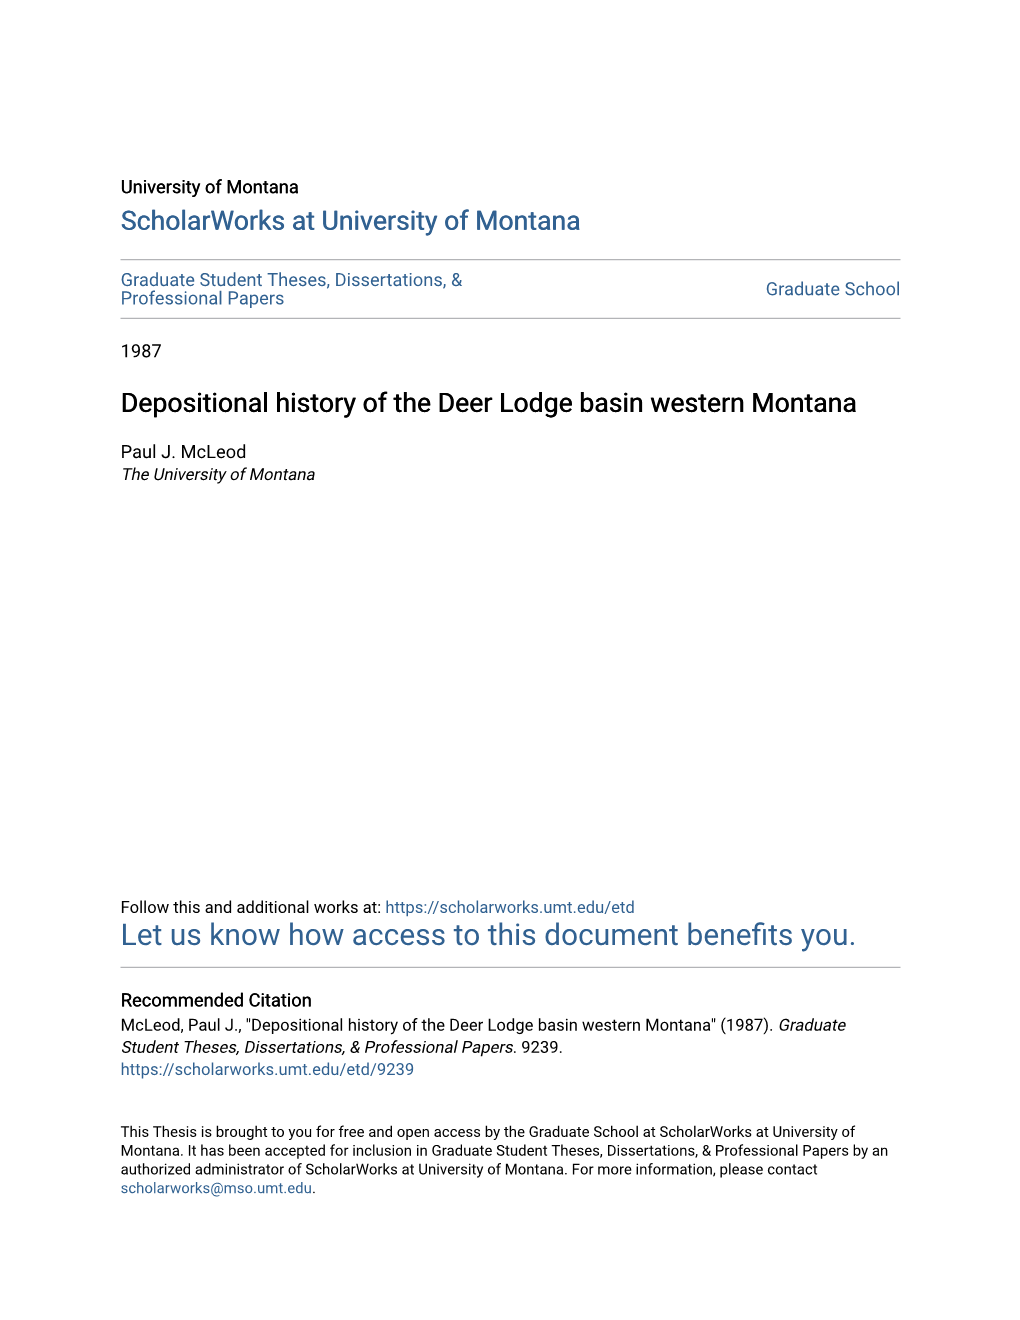 Depositional History of the Deer Lodge Basin Western Montana